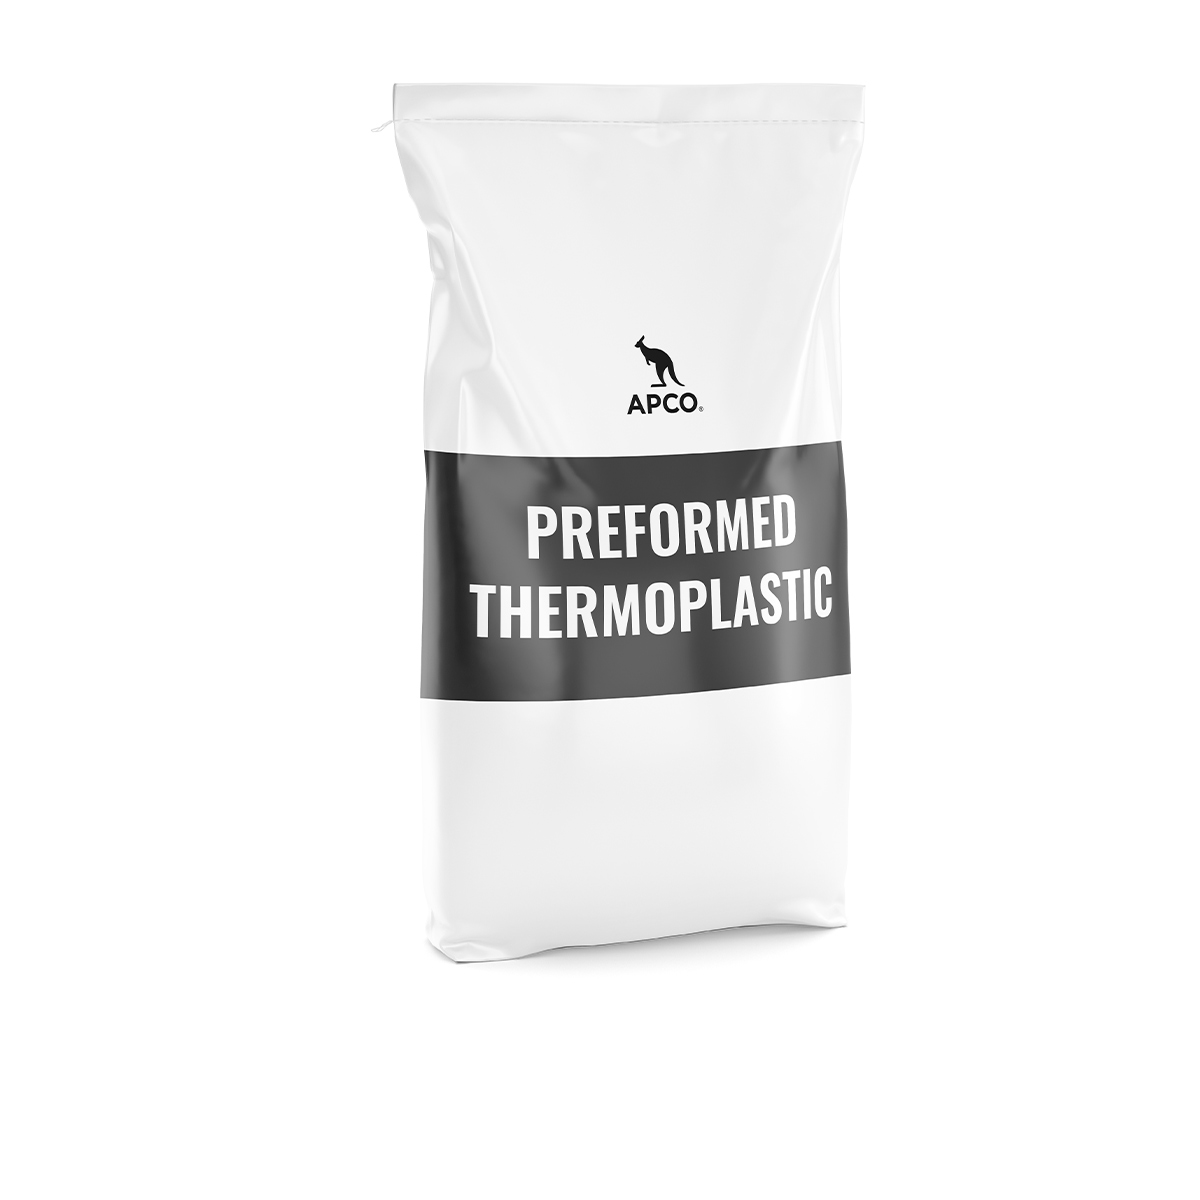 Preformed Thermoplastic